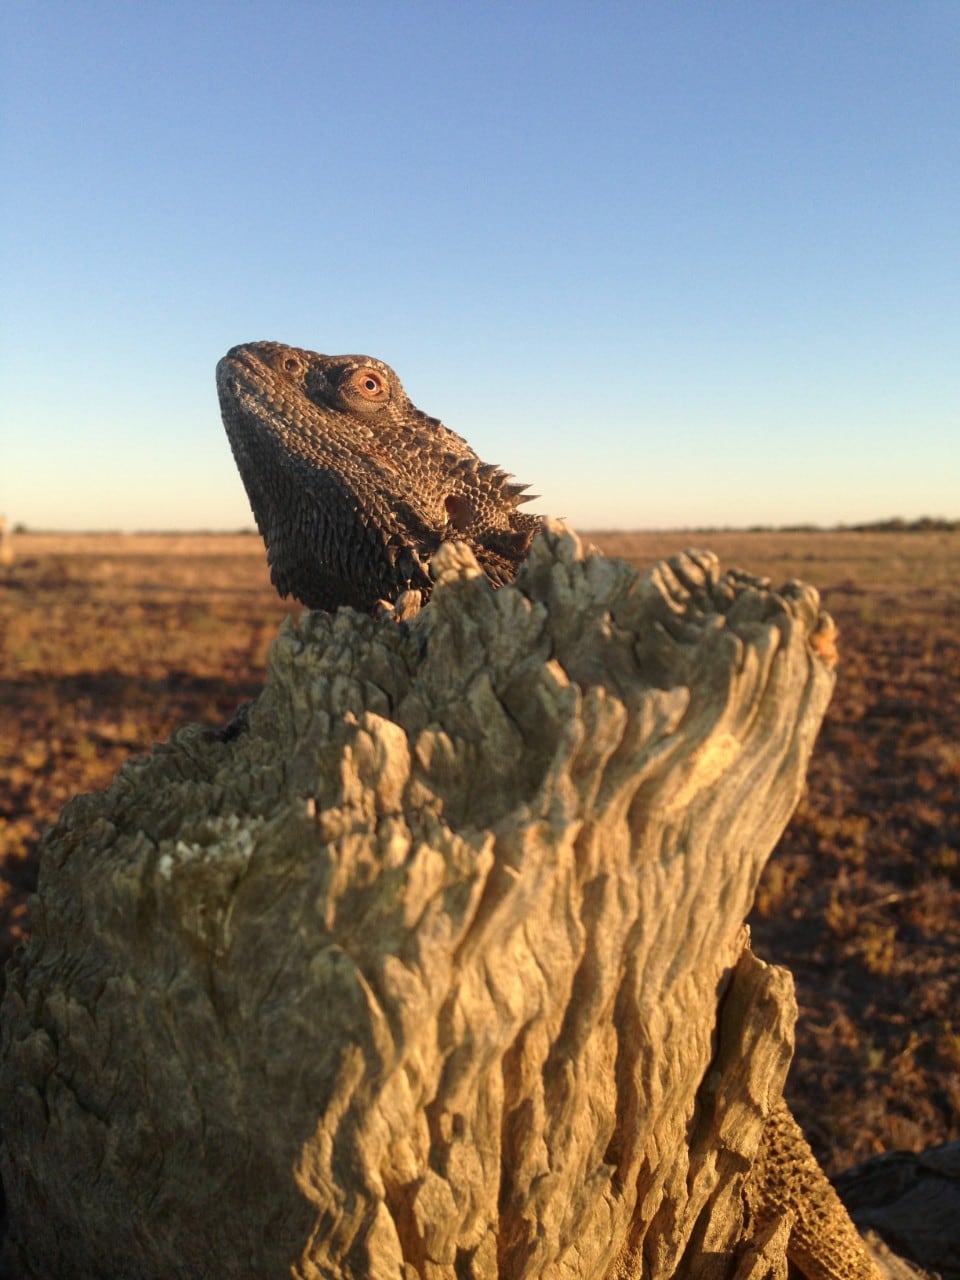 Lizard on stump tree